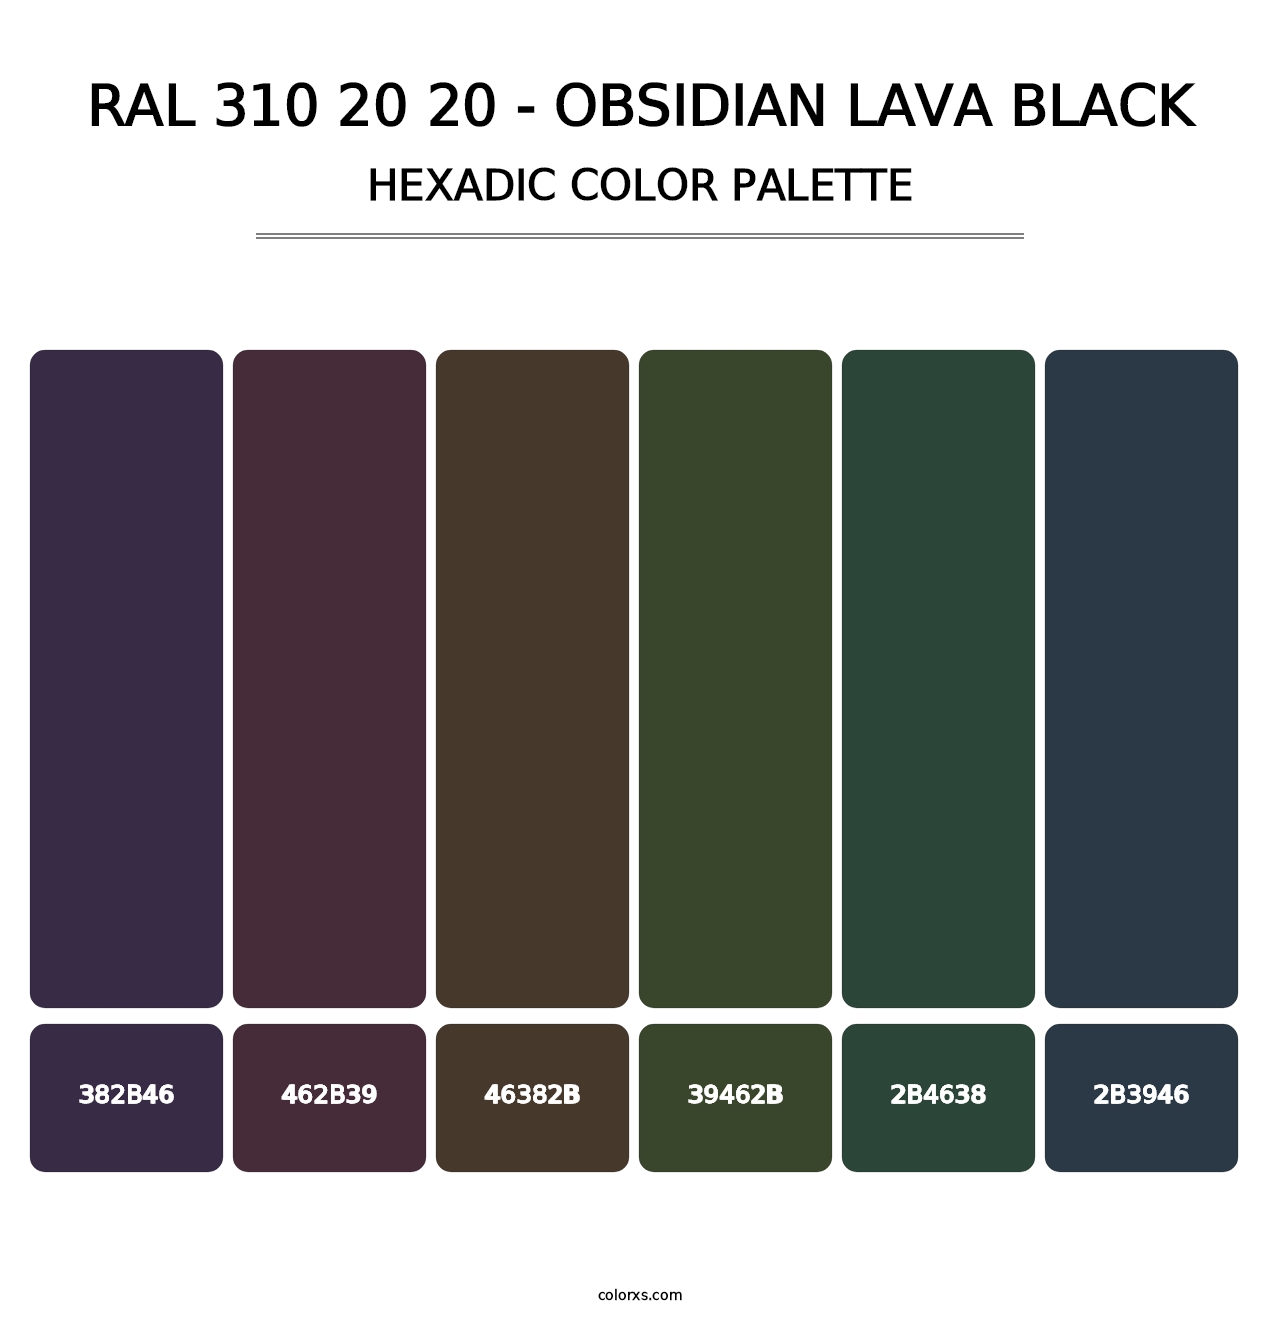 RAL 310 20 20 - Obsidian Lava Black - Hexadic Color Palette